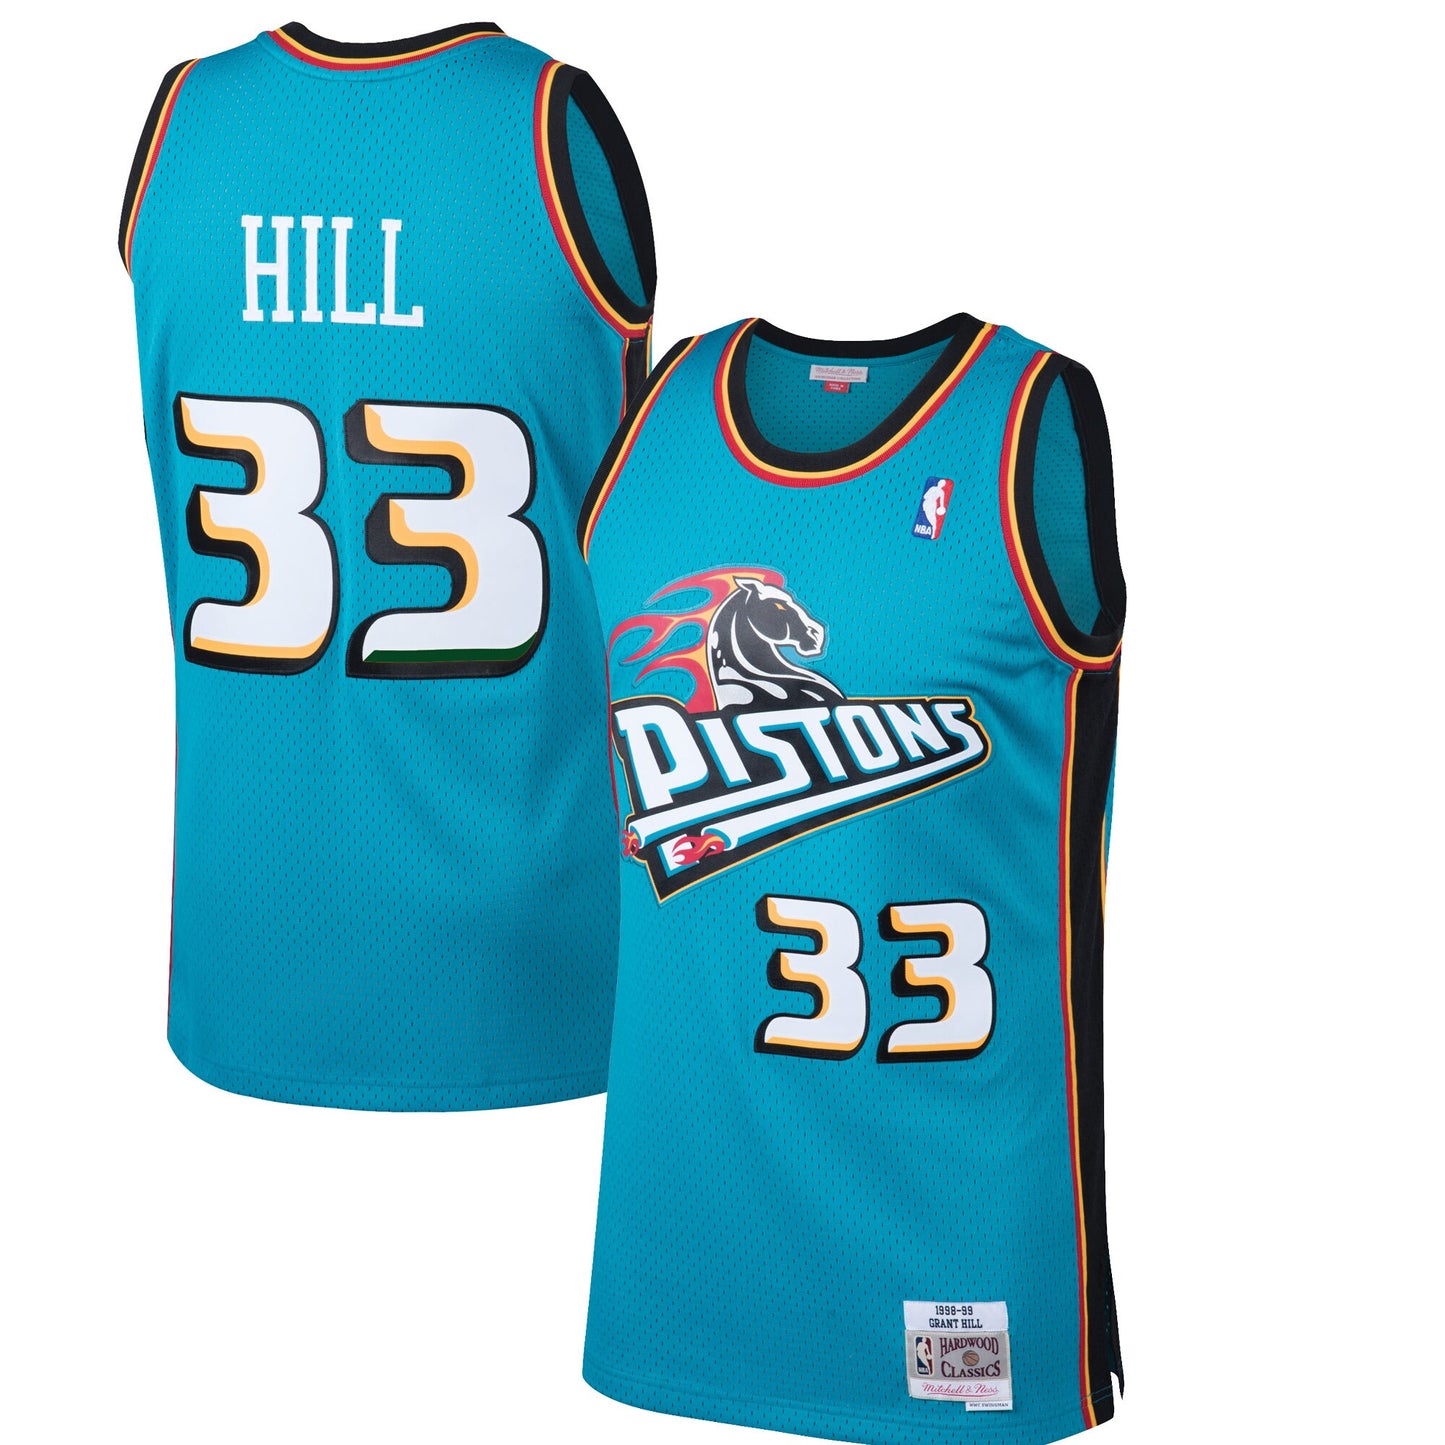 Grant Hill Detroit Pistons Mitchell & Ness Hardwood Classics Swingman Jersey - Teal